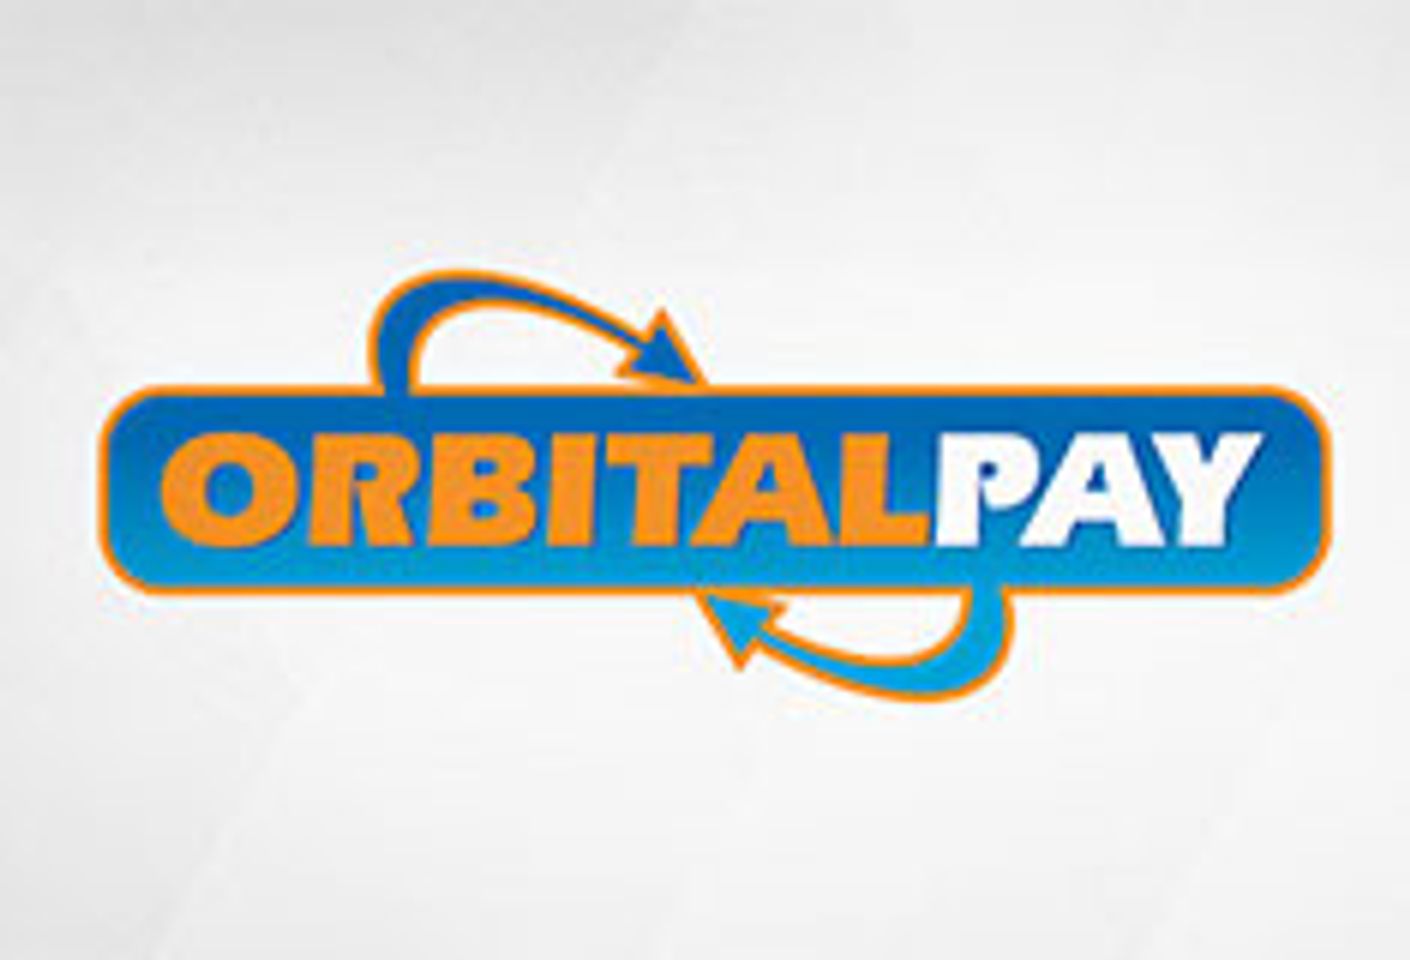 New OrbitalPay.com Site Launches